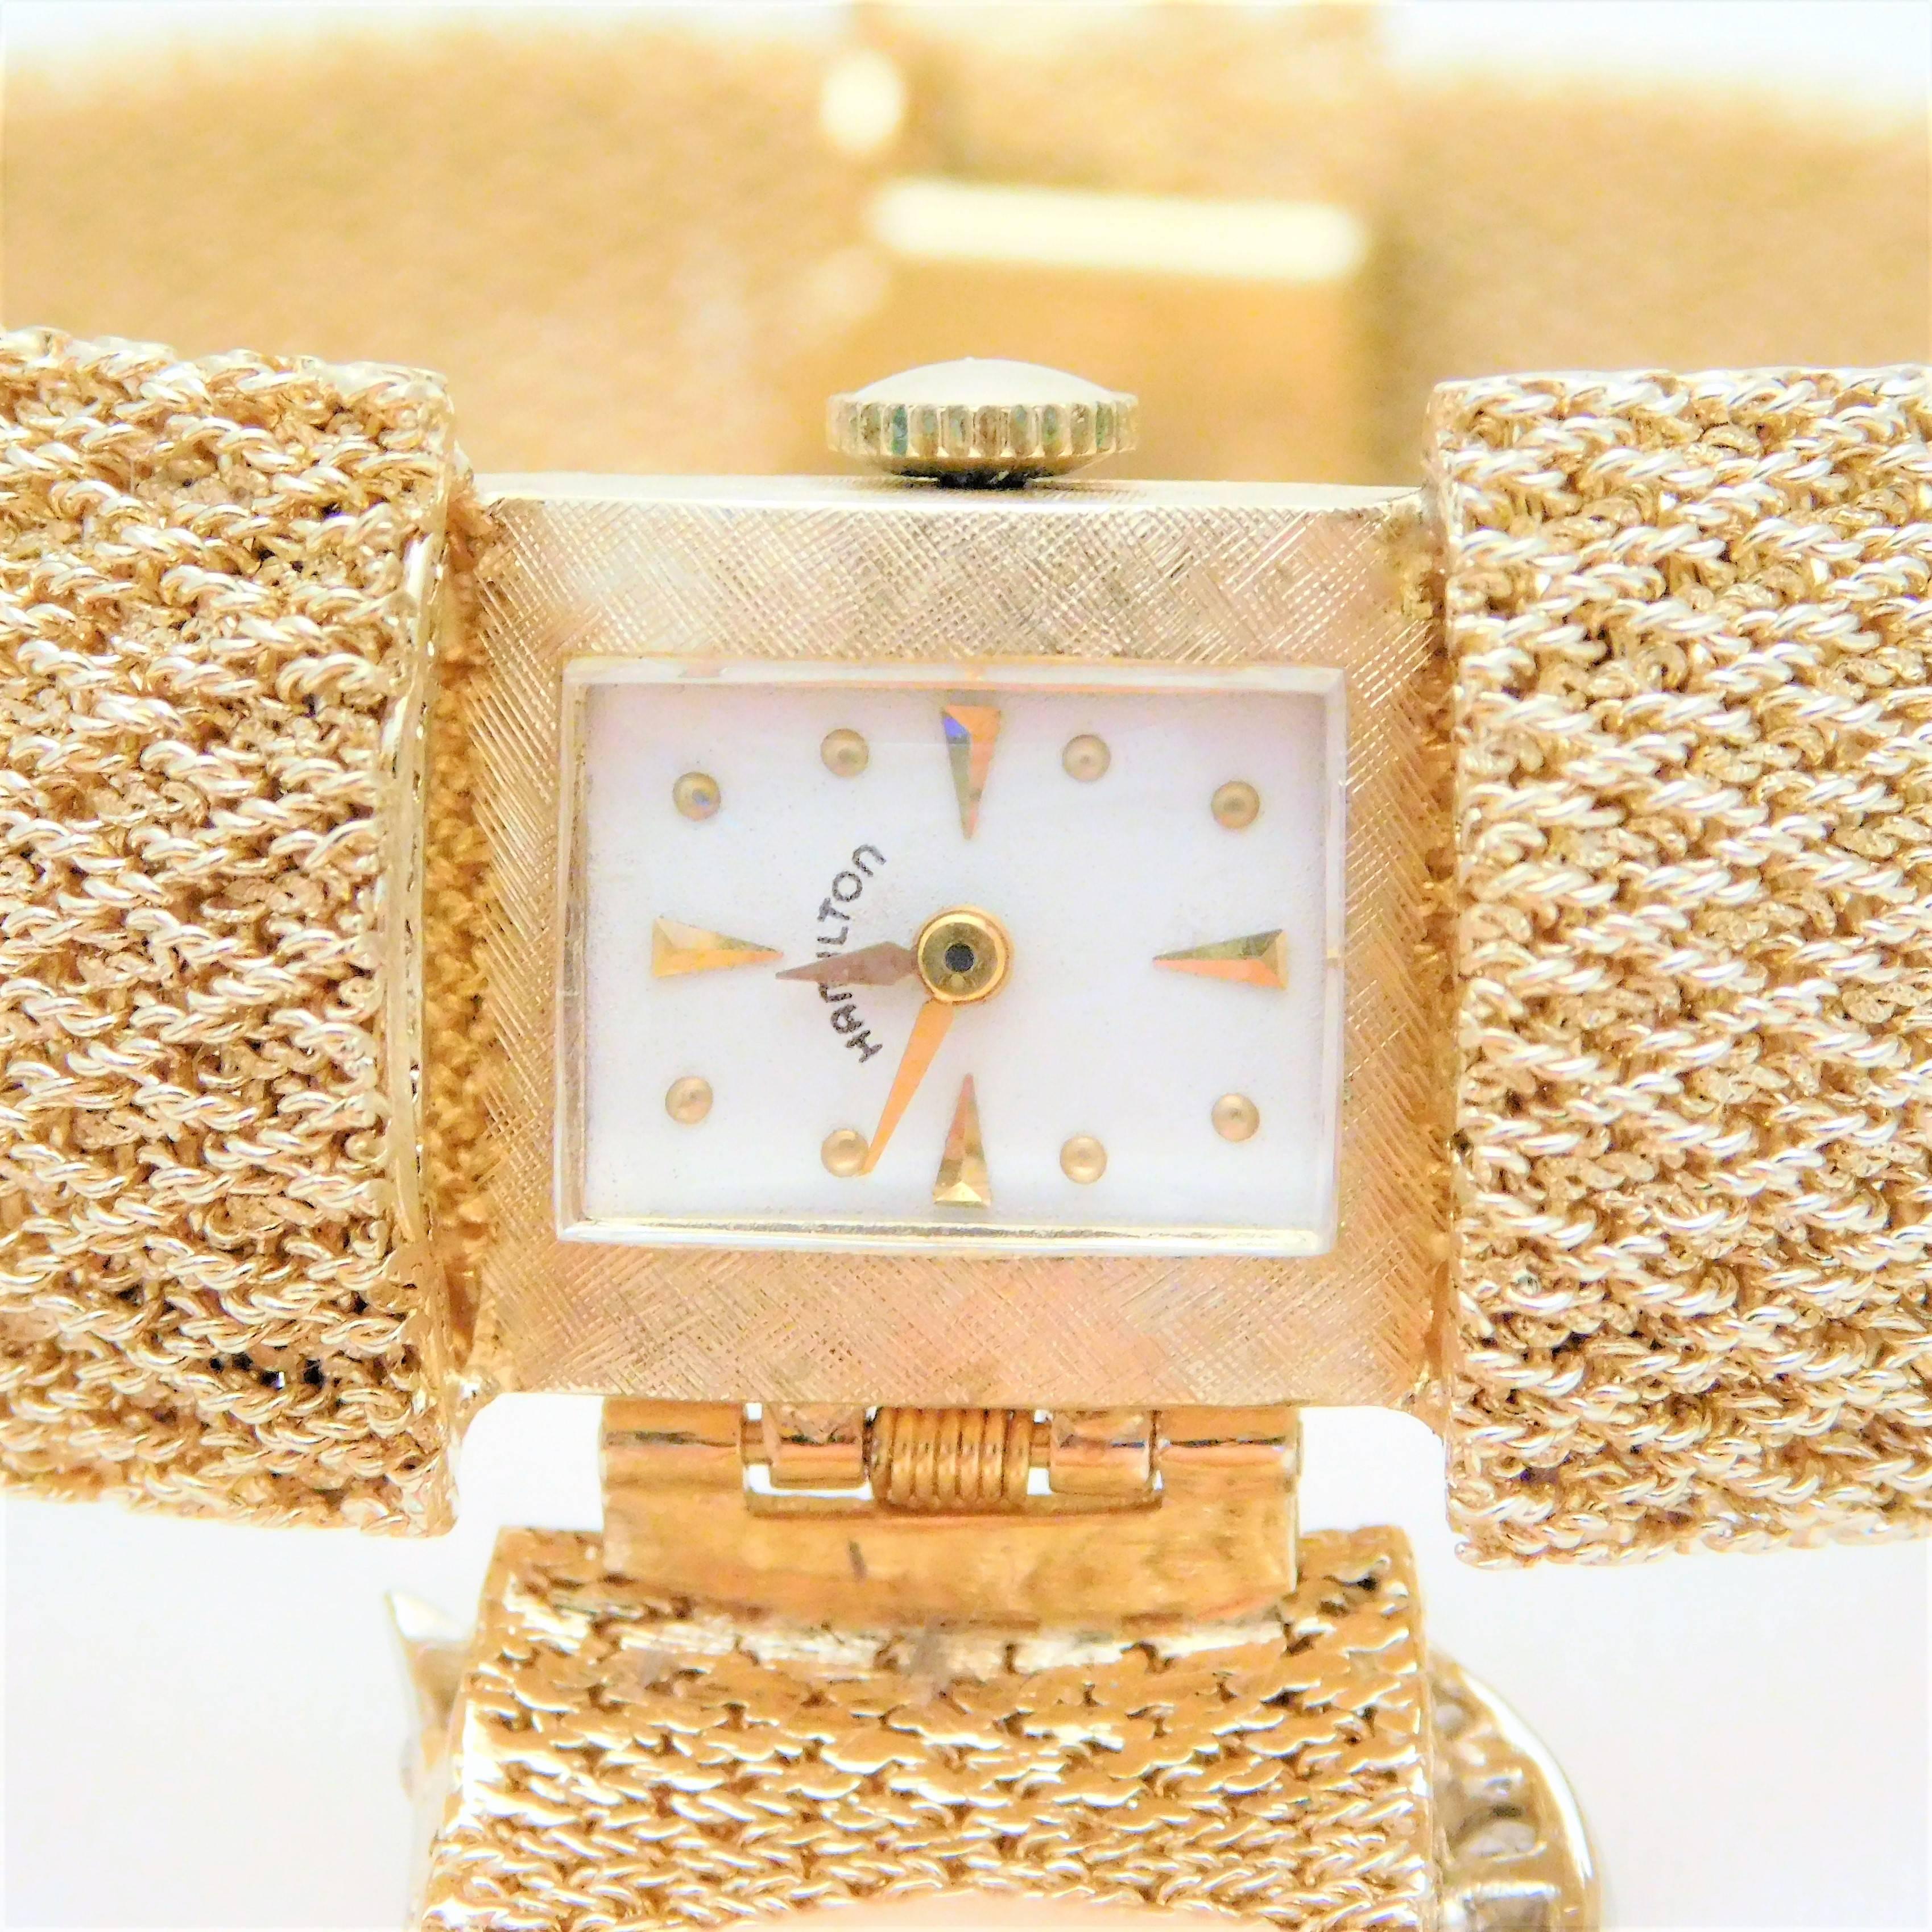 Hamilton Ladies Yellow Gold Diamond “Peek-a-boo” Manual Wristwatch, circa 1955 For Sale 1